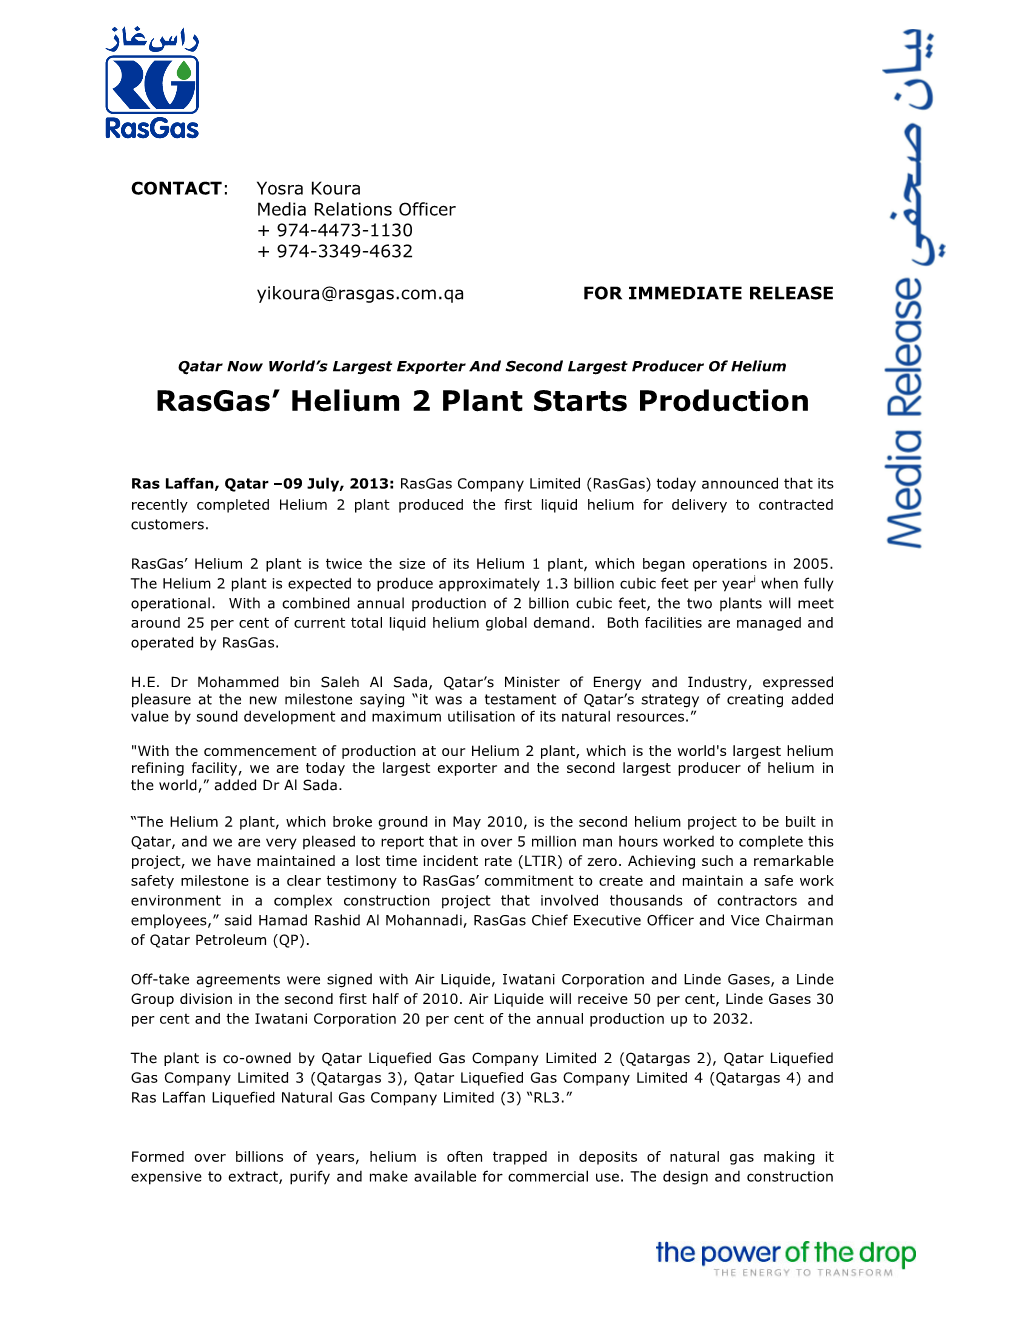 Rasgas' Helium 2 Plant Starts Production